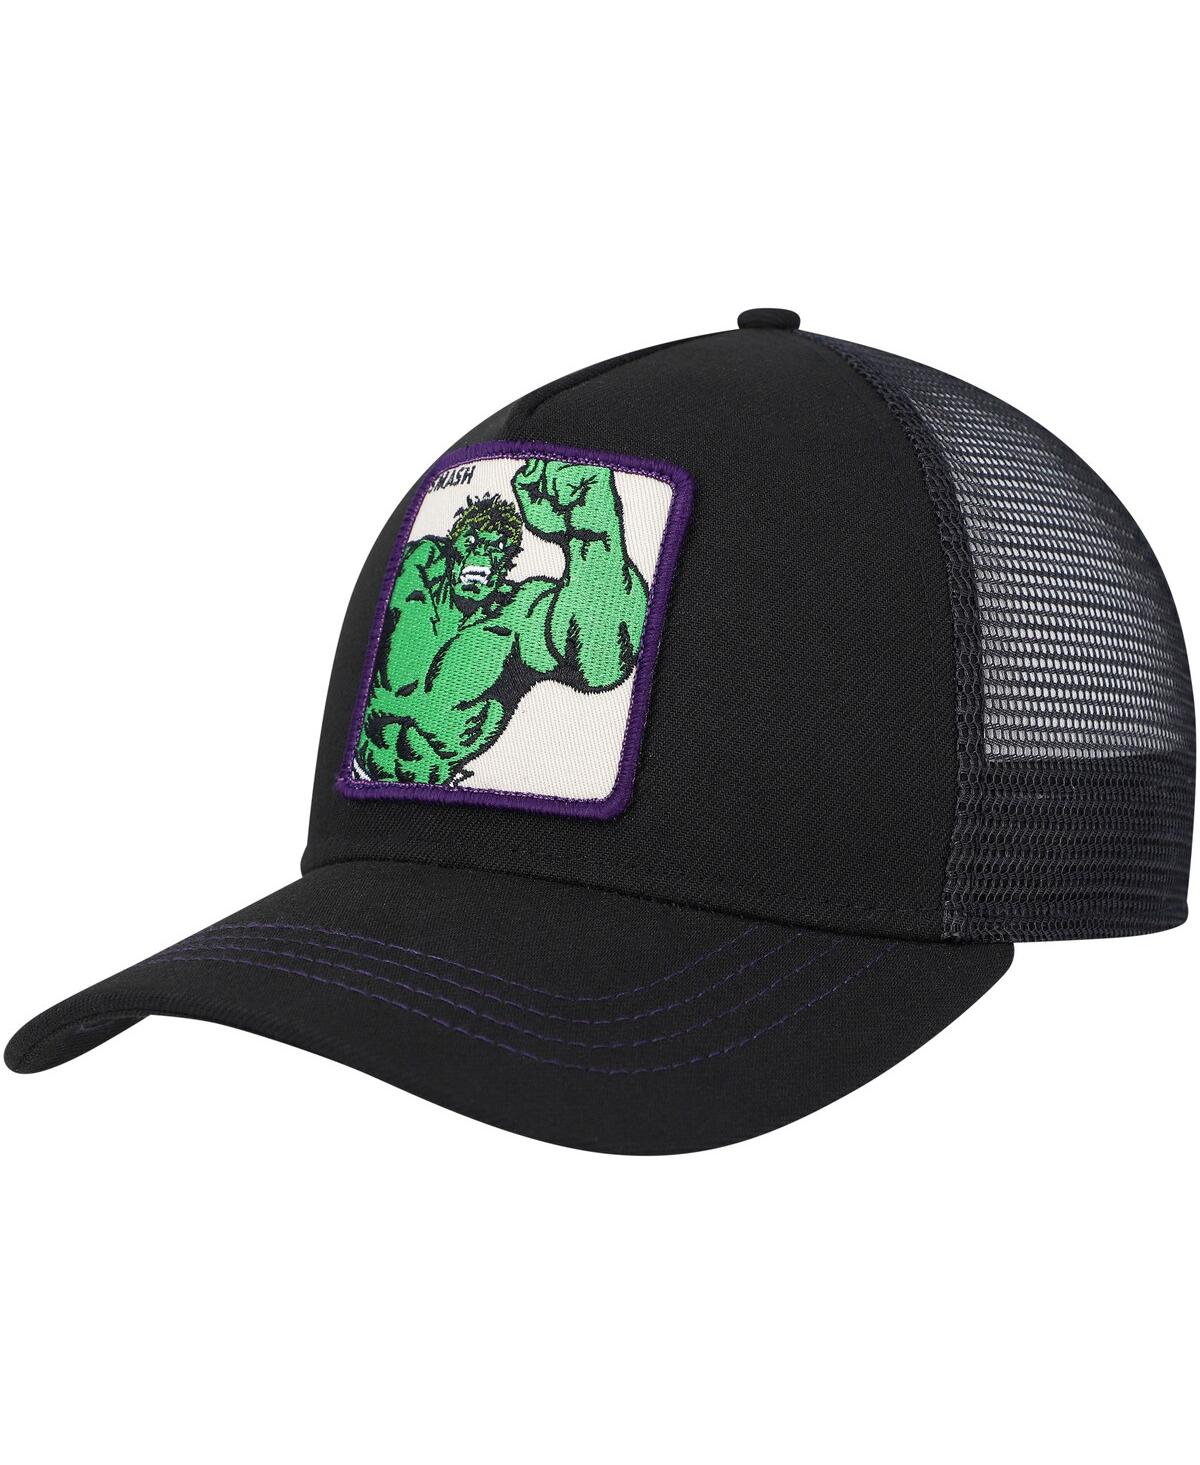 Lids Men's Black Hulk Retro A-frame Snapback Hat